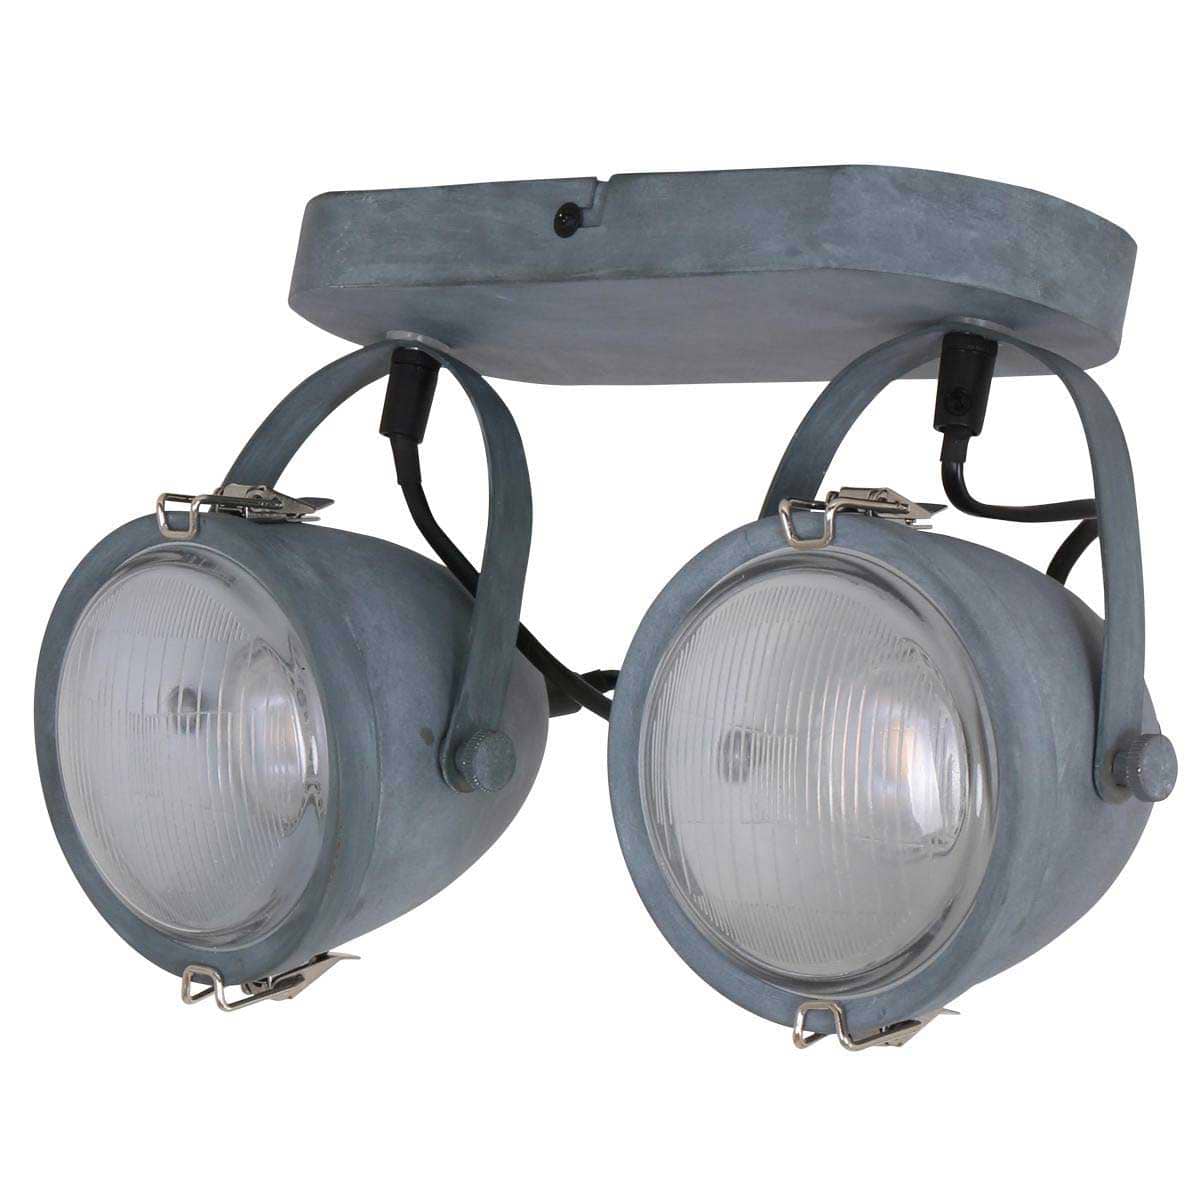 pols Belang koppeling Industriële plafondlamp 2-lichts spot, grijs, Paco, MEXLITE, 1312GR,  industrielamp, industriële plafondlamp, plafondspots, plafondlamp,  landelijk, industrieel, Mexlite - 1312GR - Webo Verlichting